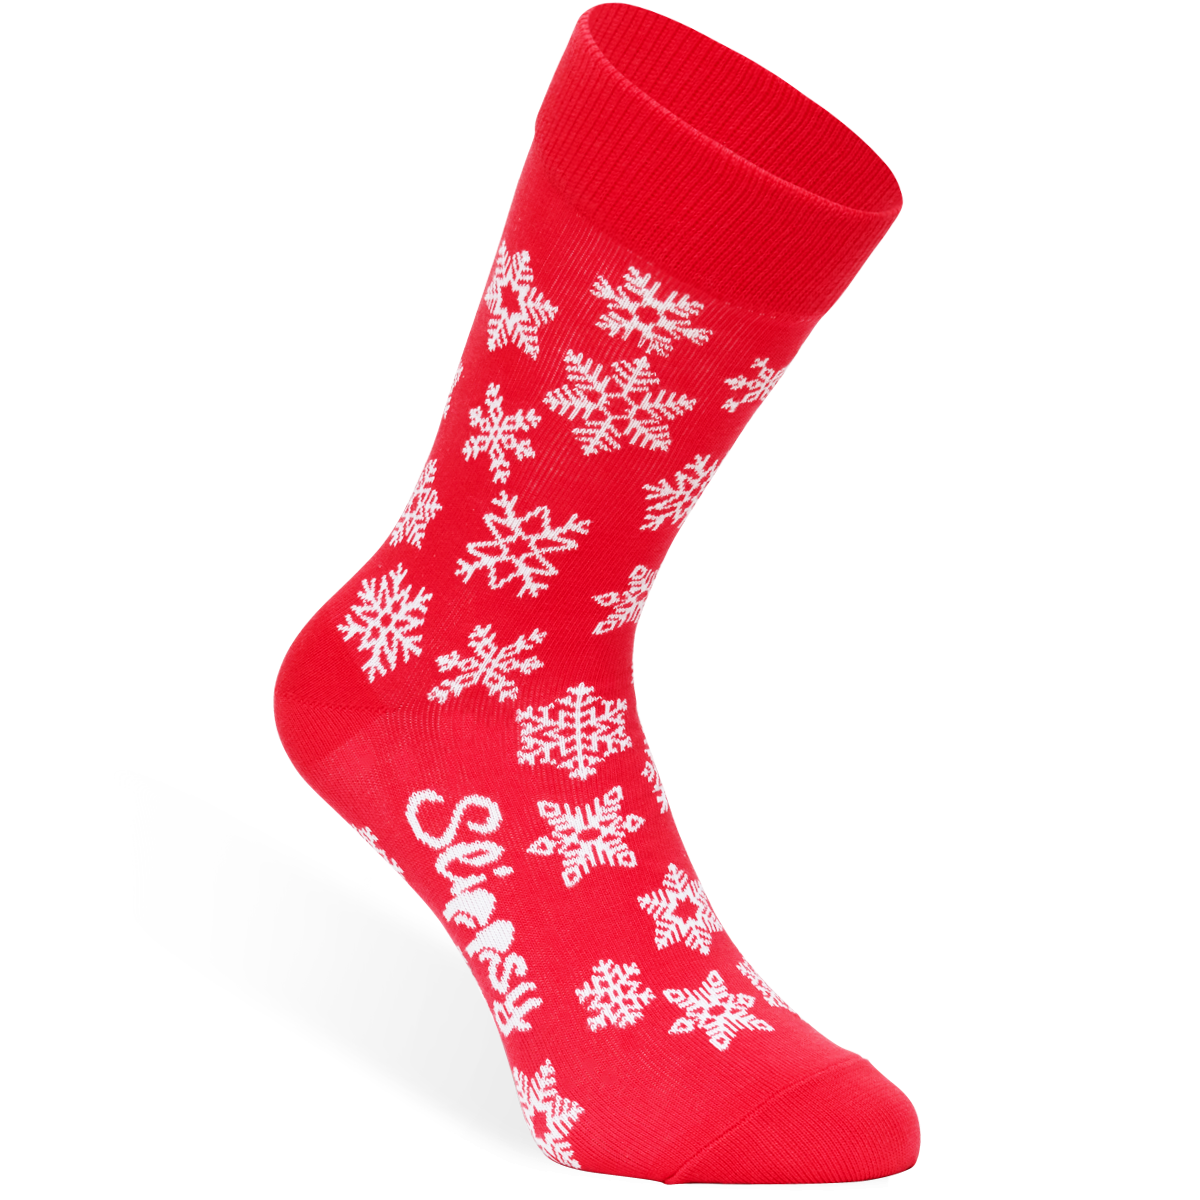 E-shop Slippsy Red Snowflake socks/35-38